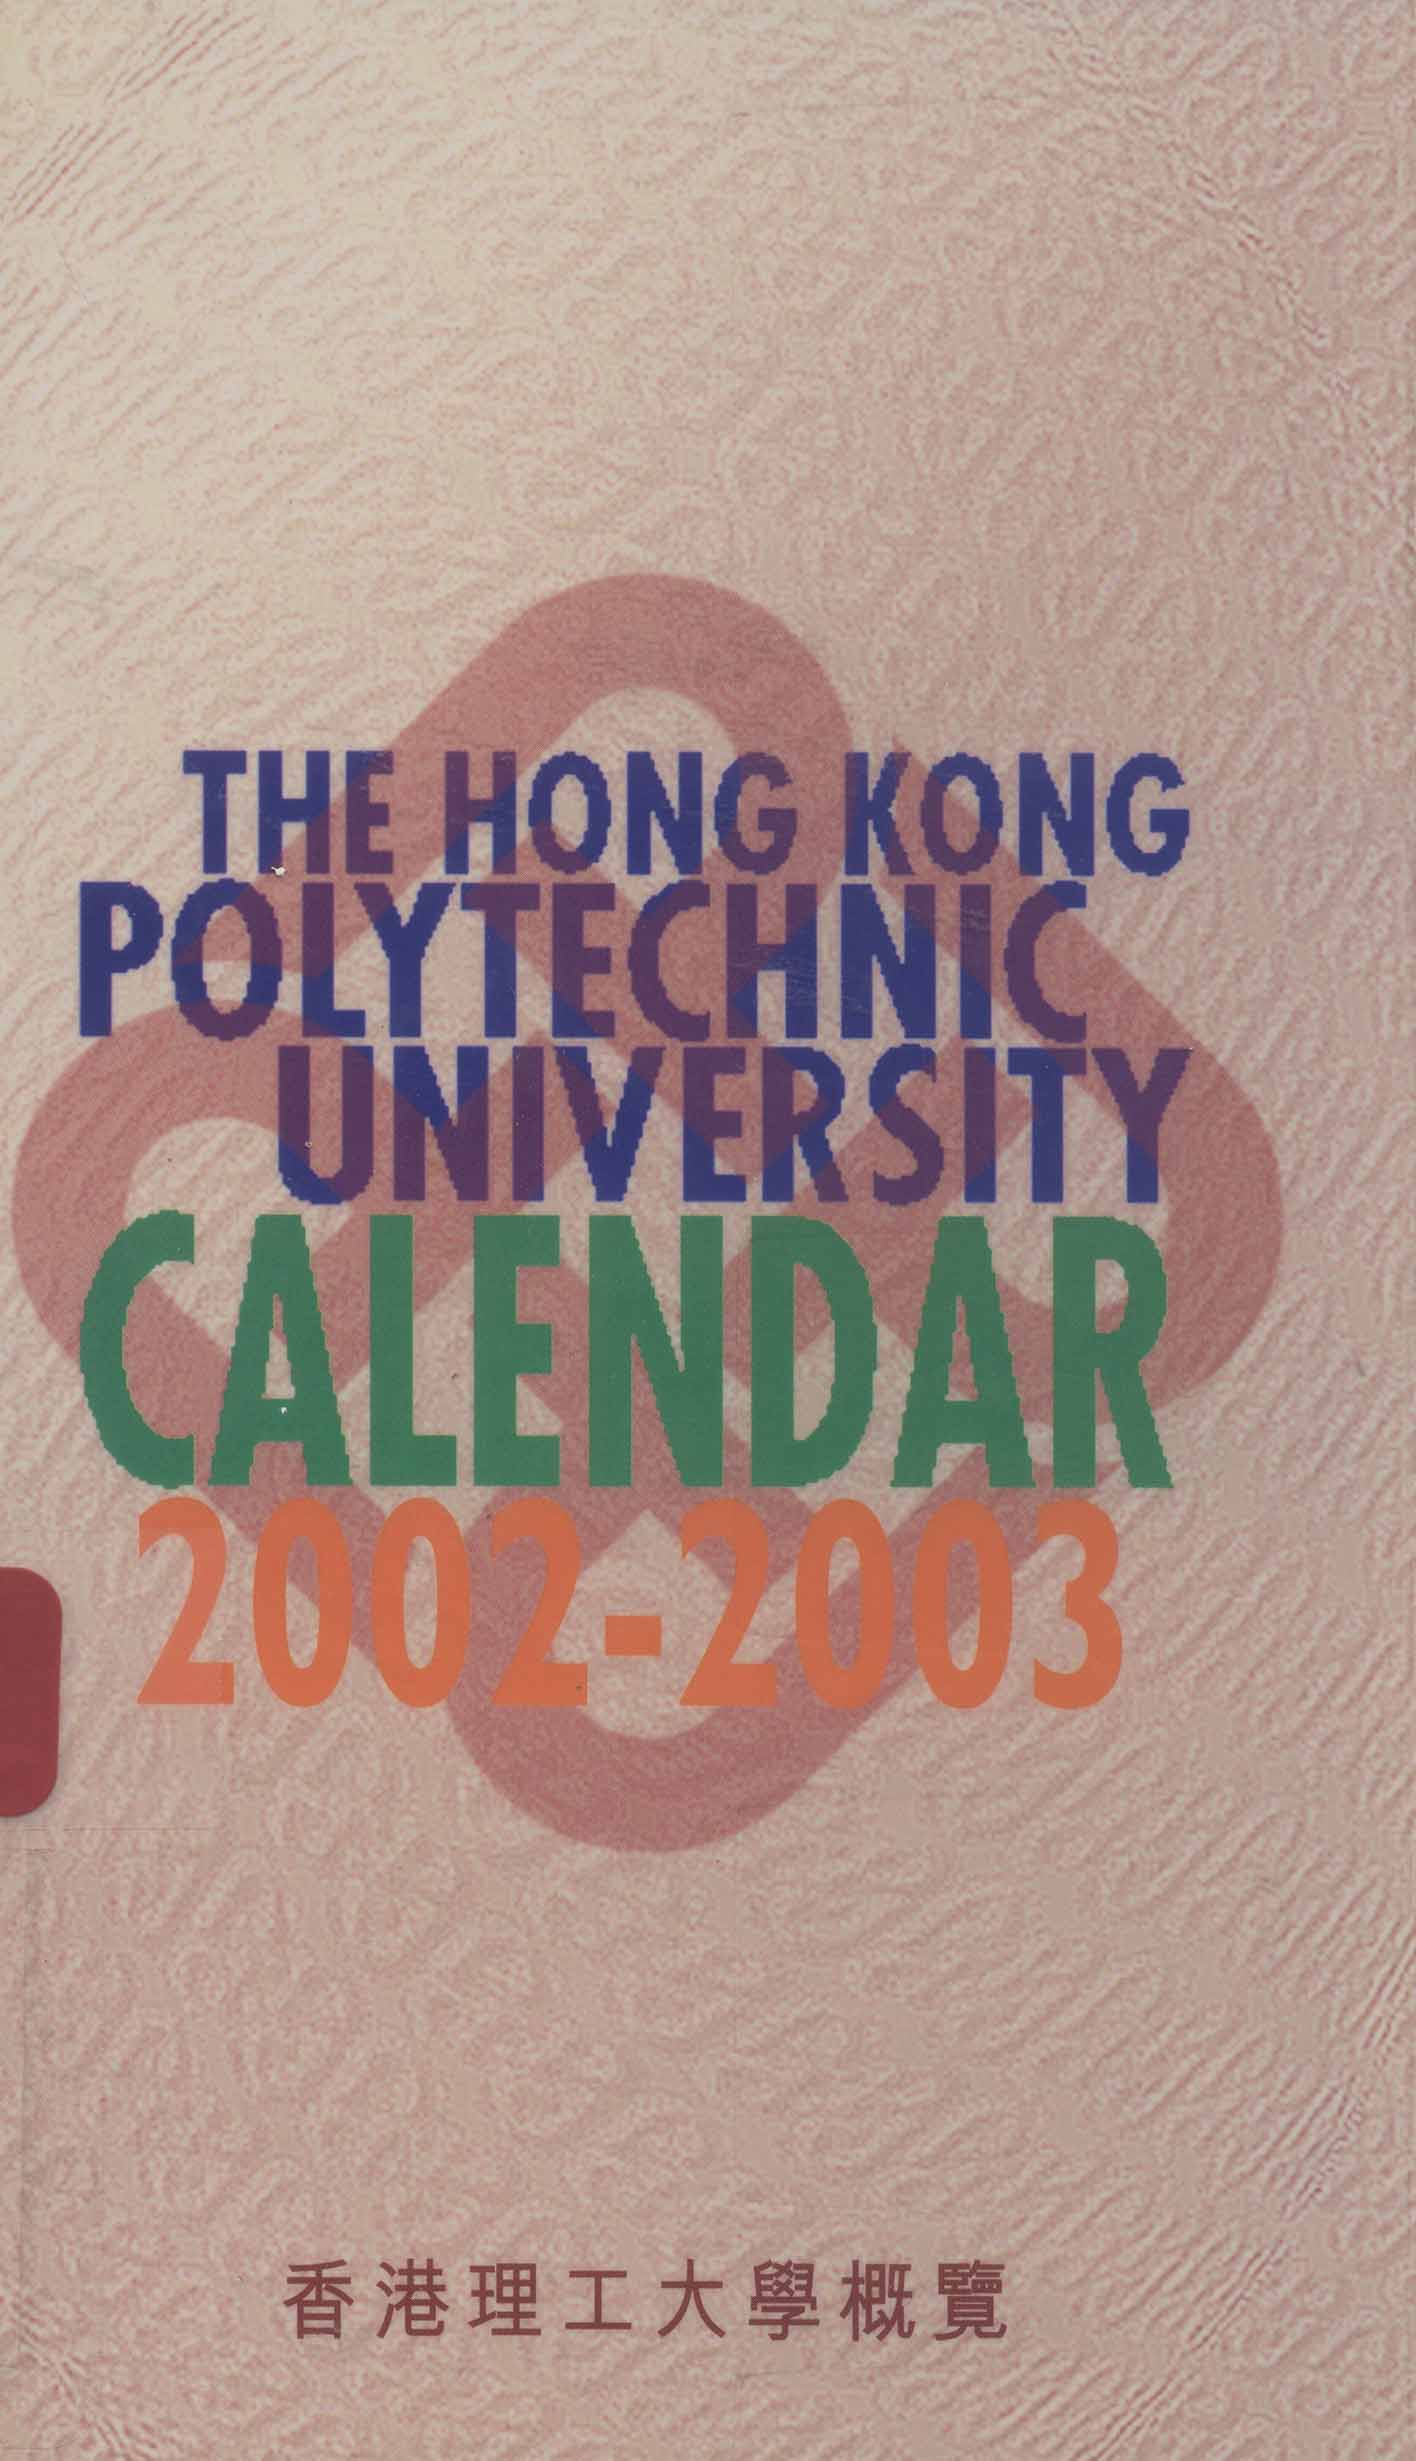 The Hong Kong Polytechnic University Calendar [2002-2003]